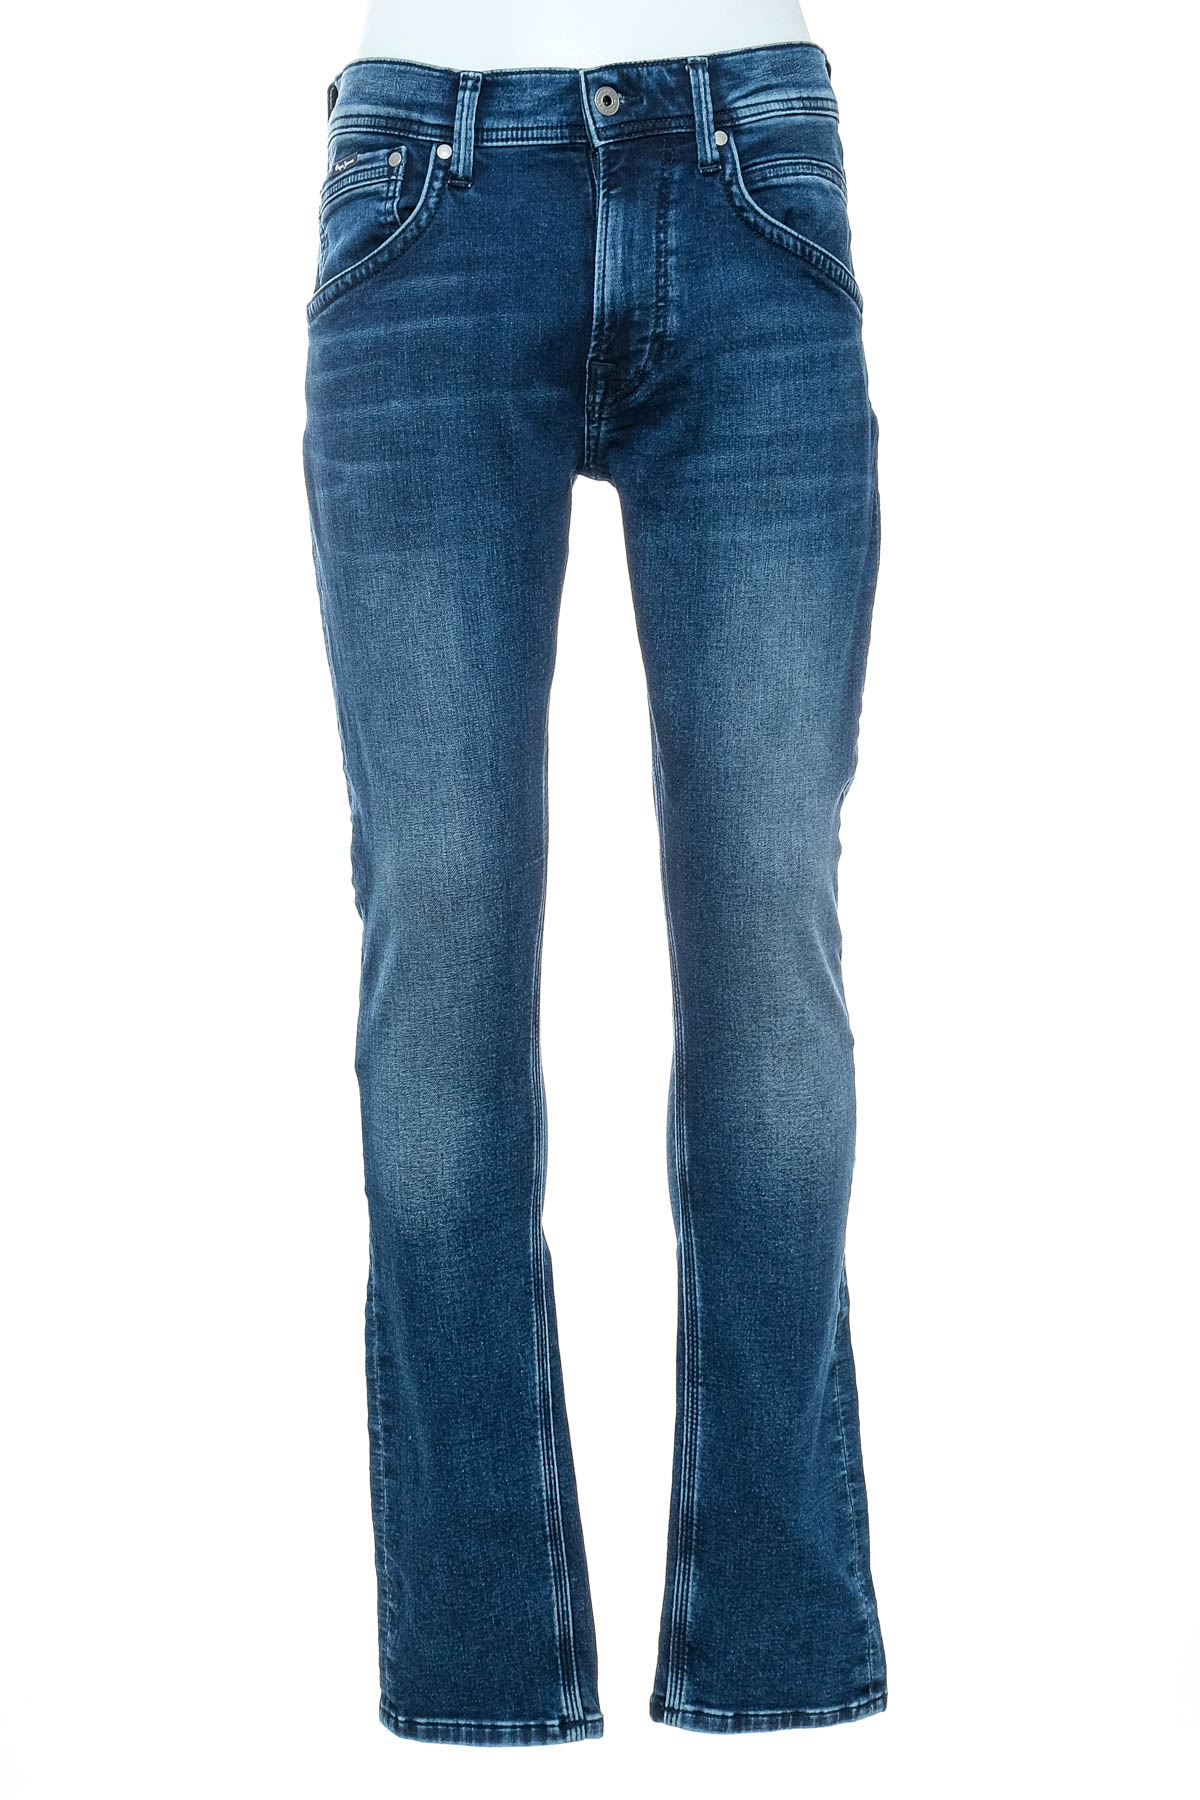 Men's jeans - Pepe Jeans - 0